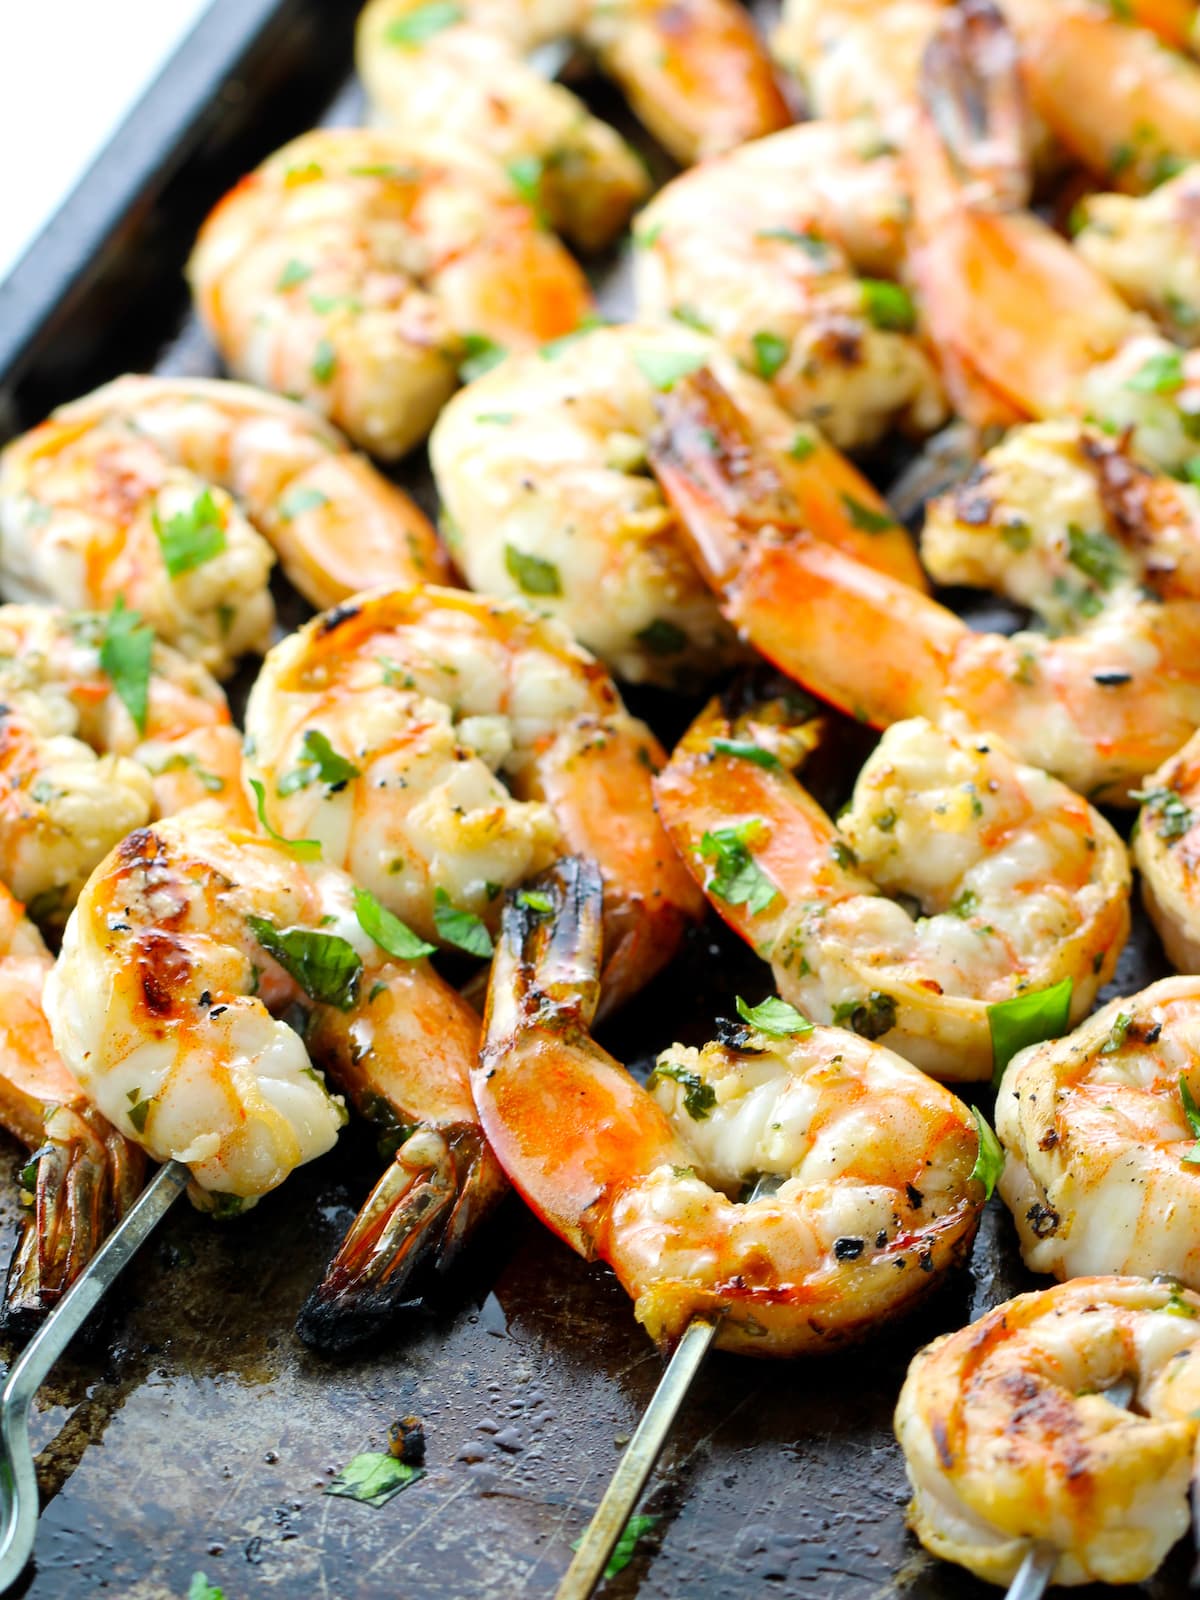 A close-up of grilled shrimp on skewers.